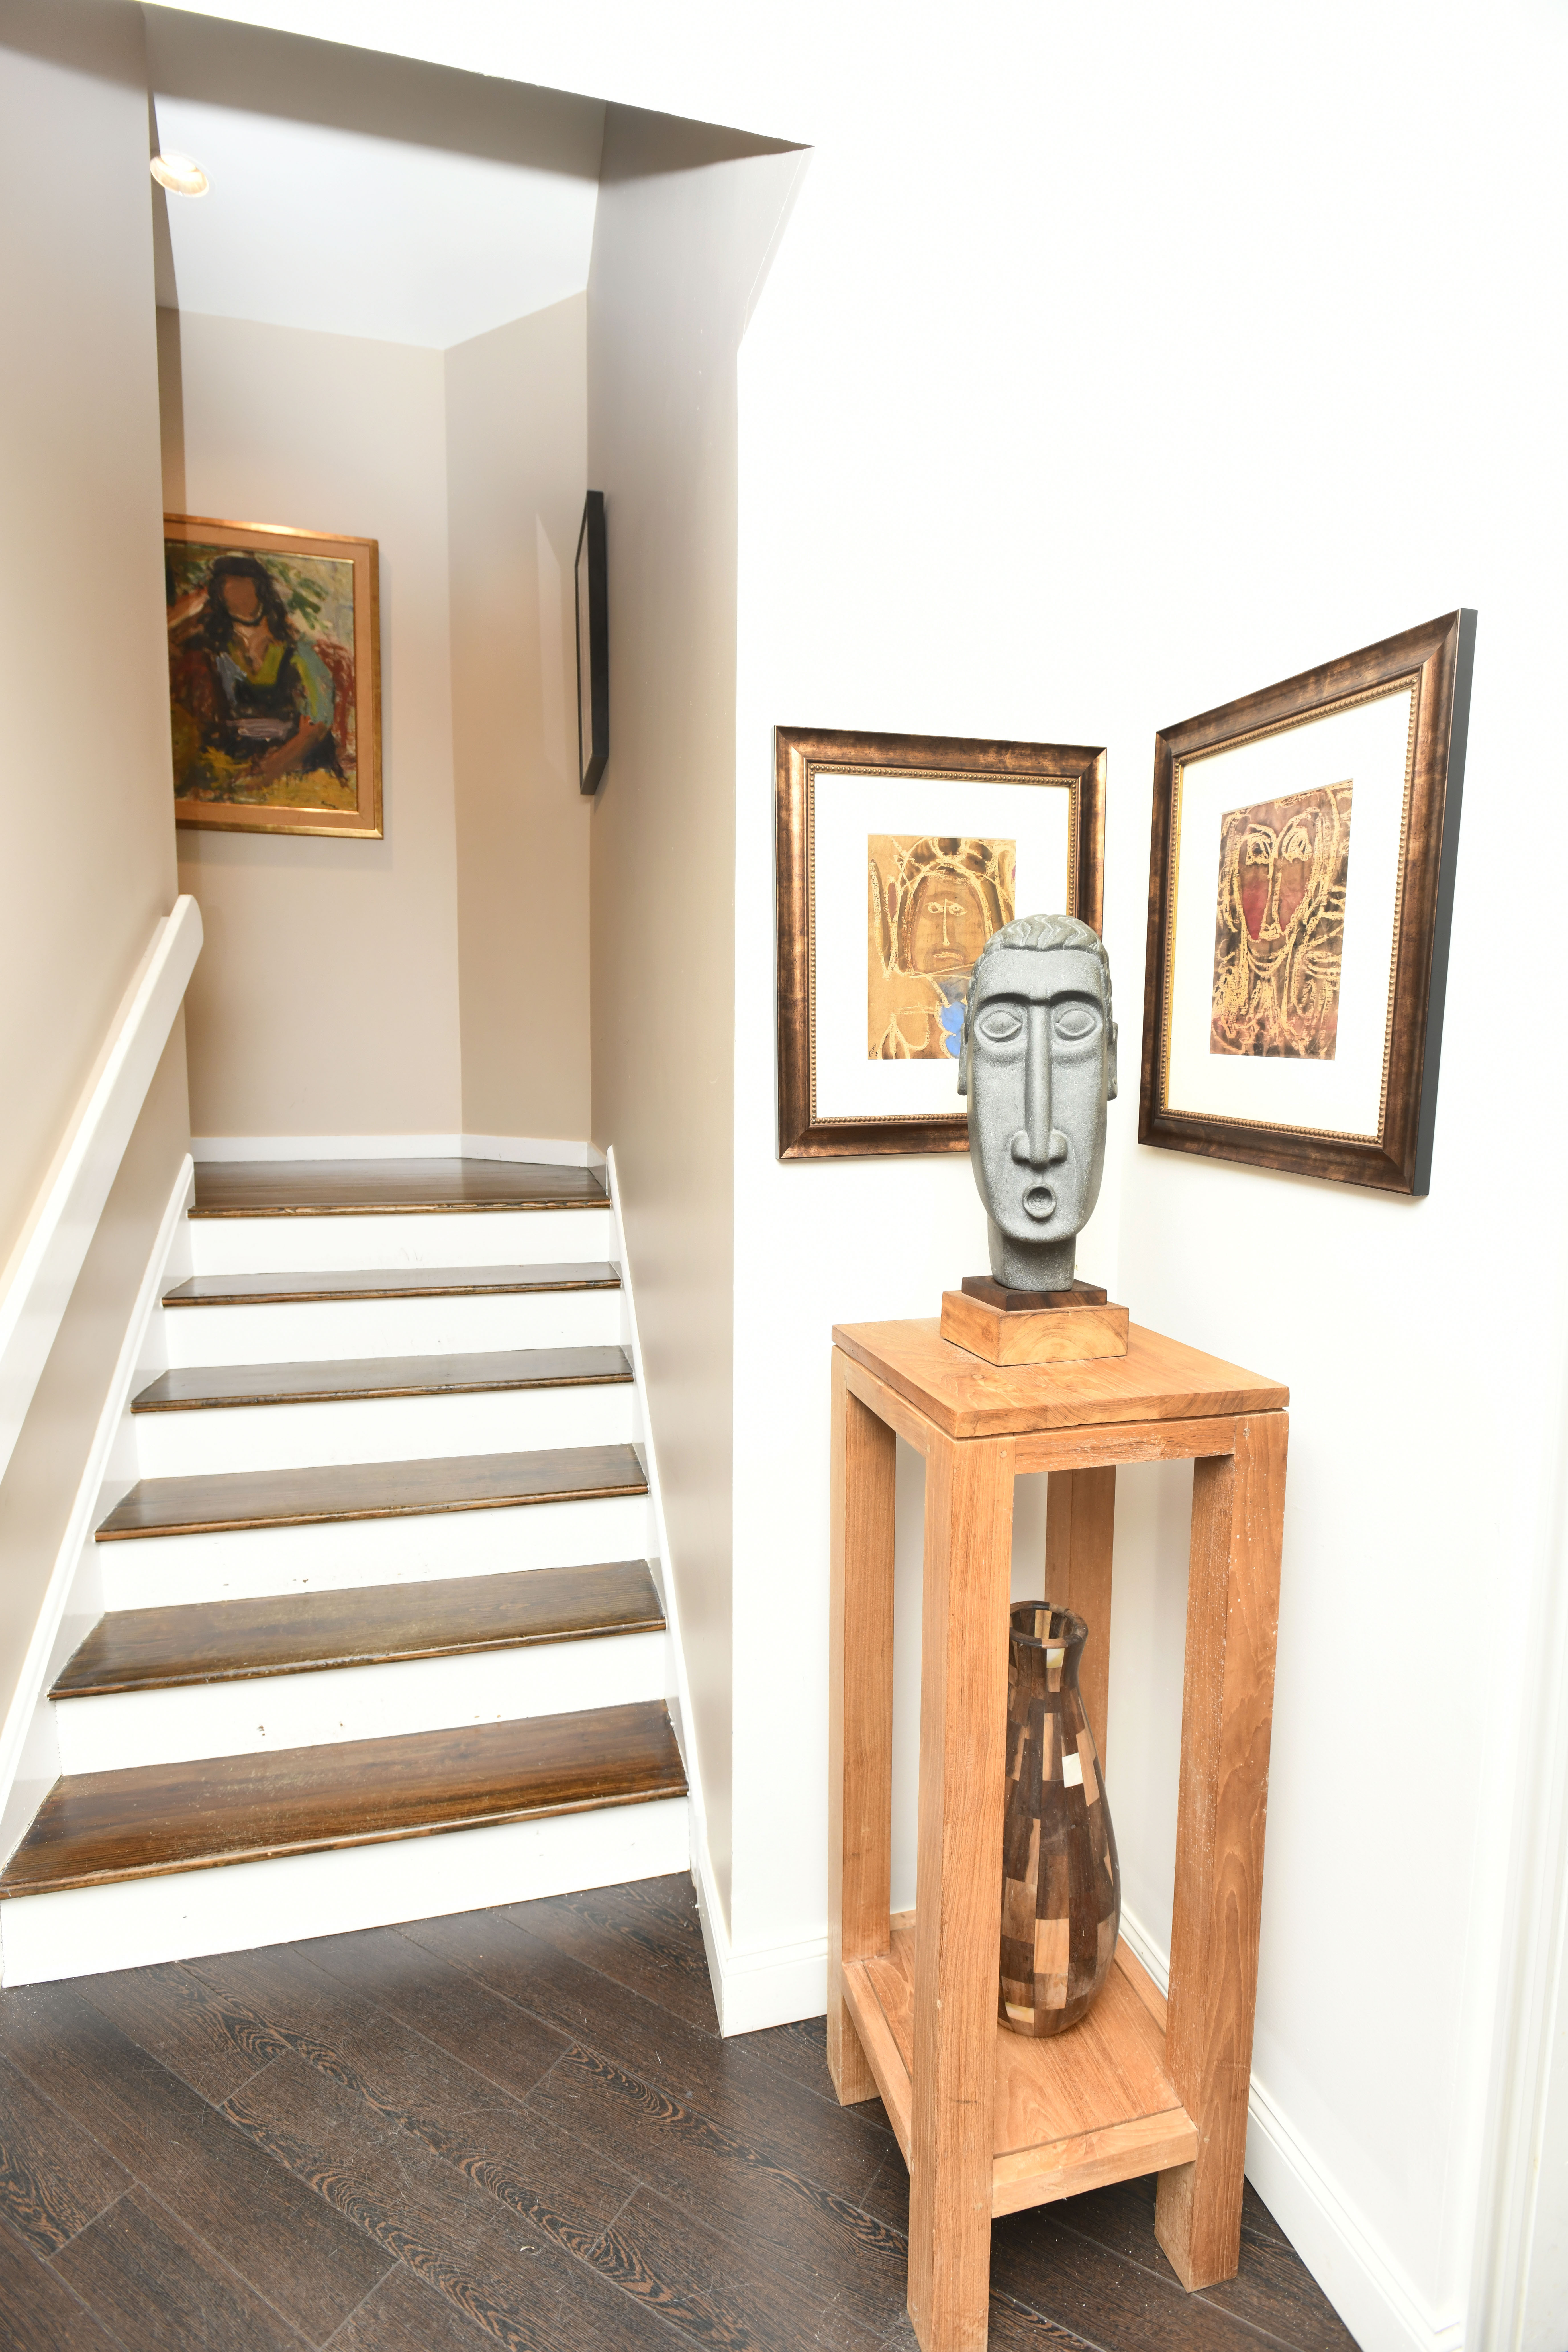 Artwork covers the walls in Rick Friedman's Southampton home. DANA SHAW